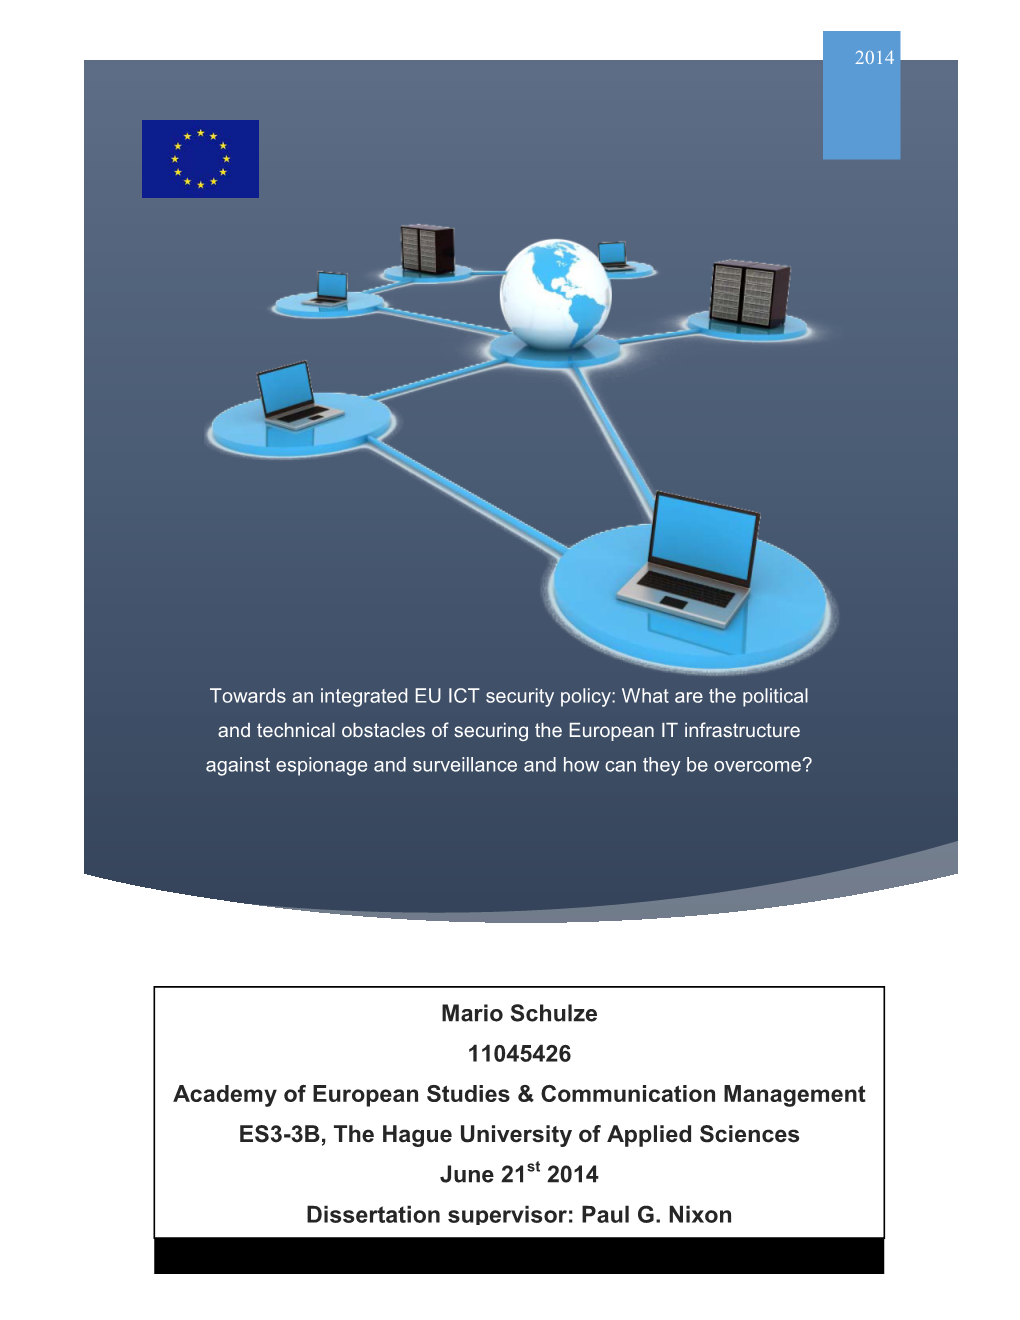 Towards an Integrated EU ICT Security Policy